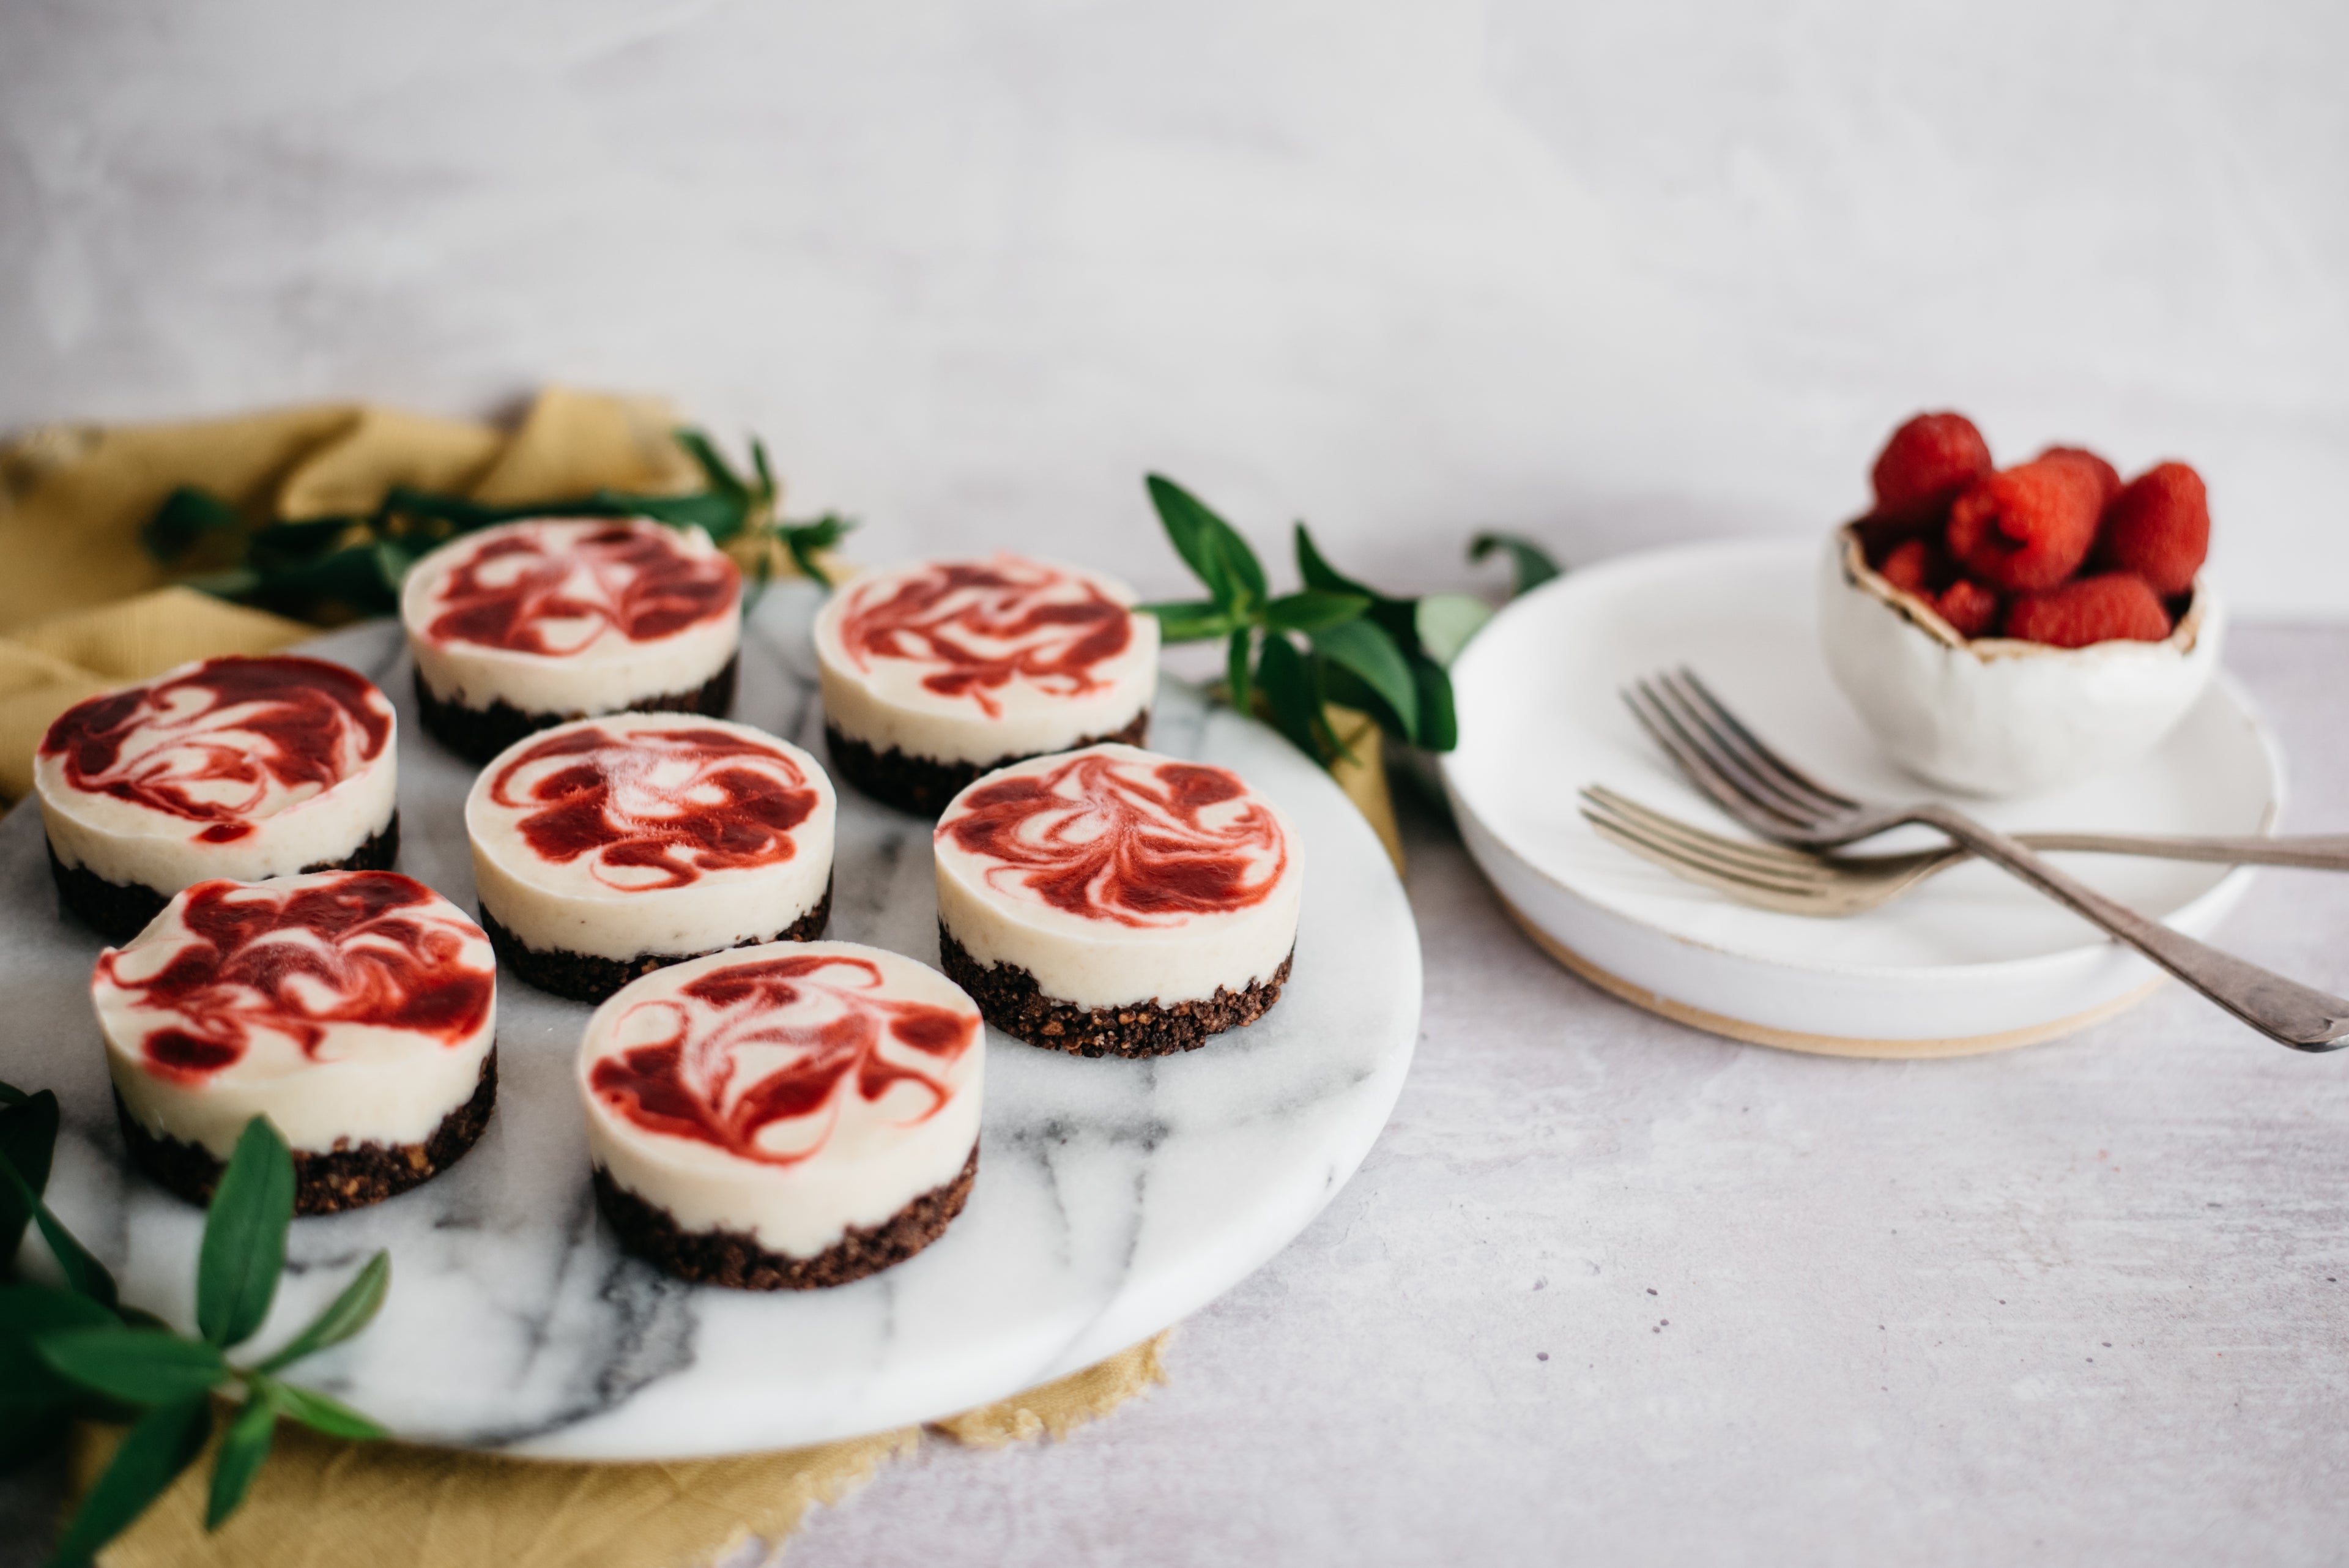 Side view of 7 vegan raspberry and banana cheesecake cups